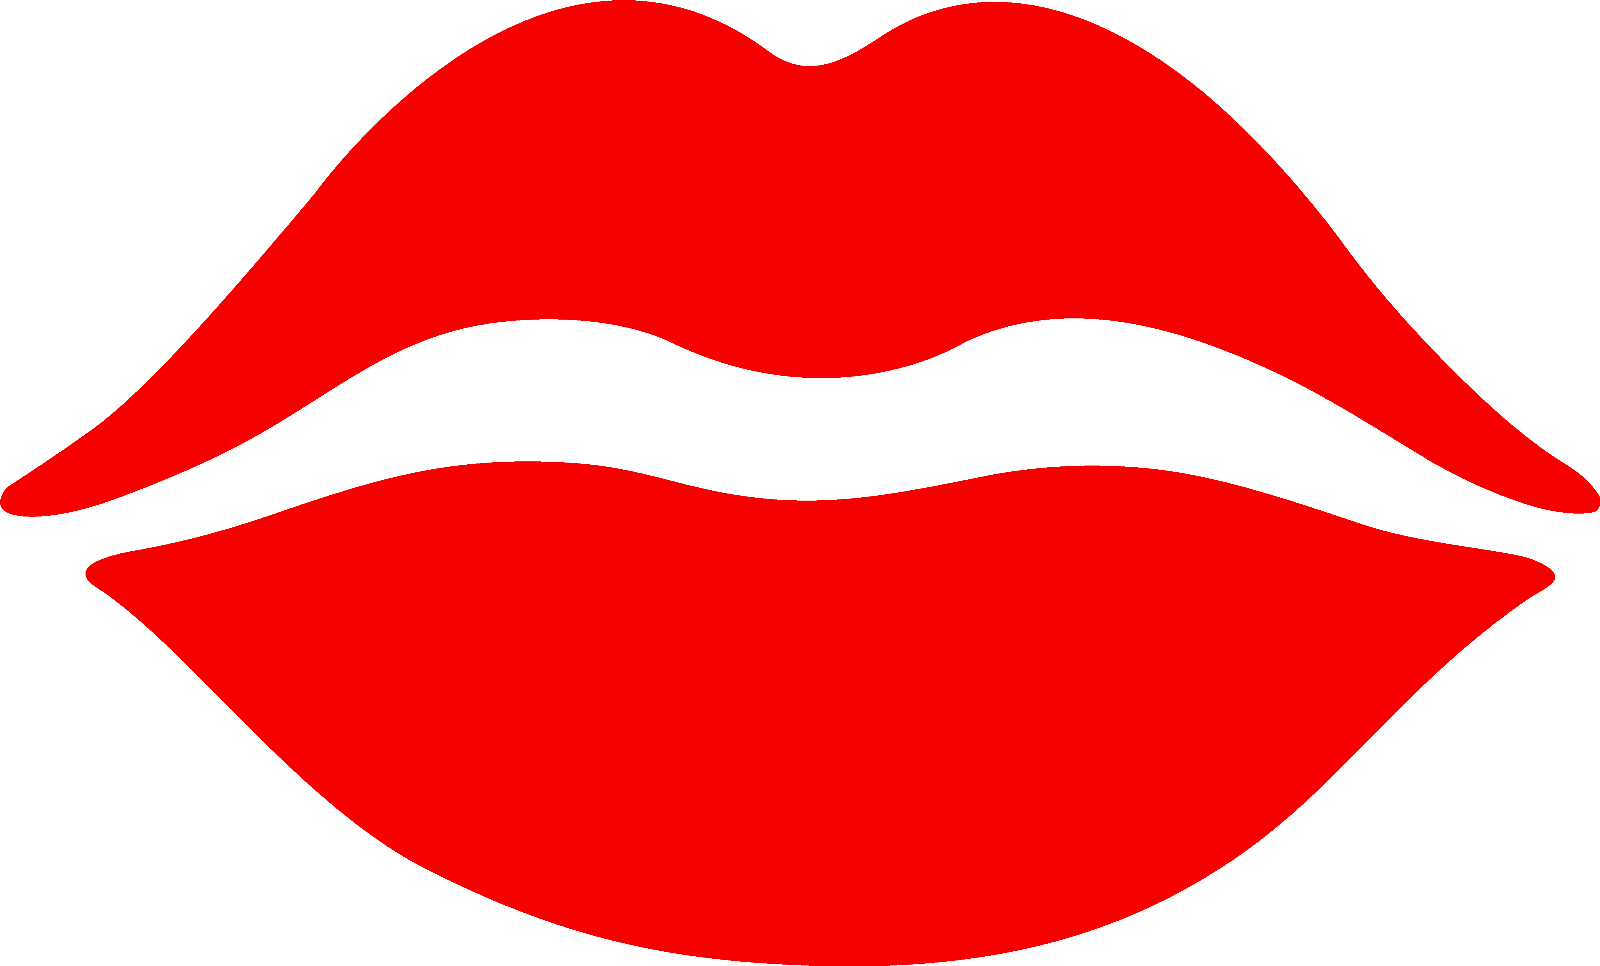 Best Photos of Lips Outline Vector - Lips Outline Clip Art, Lips ...